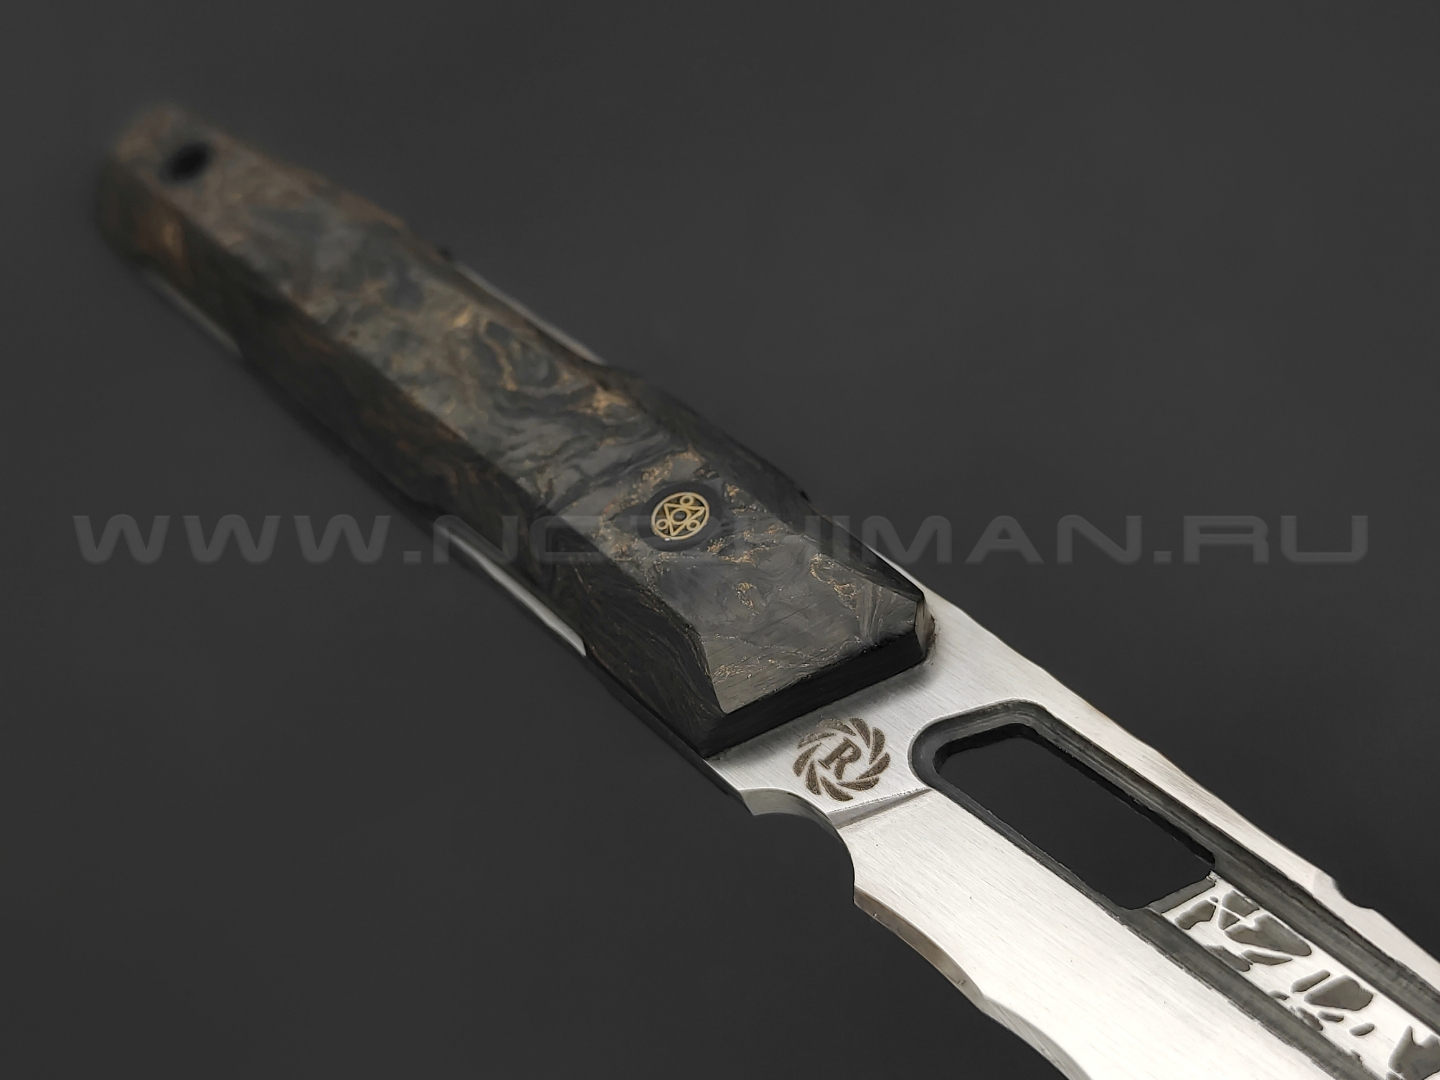 Neyris Knives нож Sintet S сталь M398, рукоять Carbon fiber dark matter gold